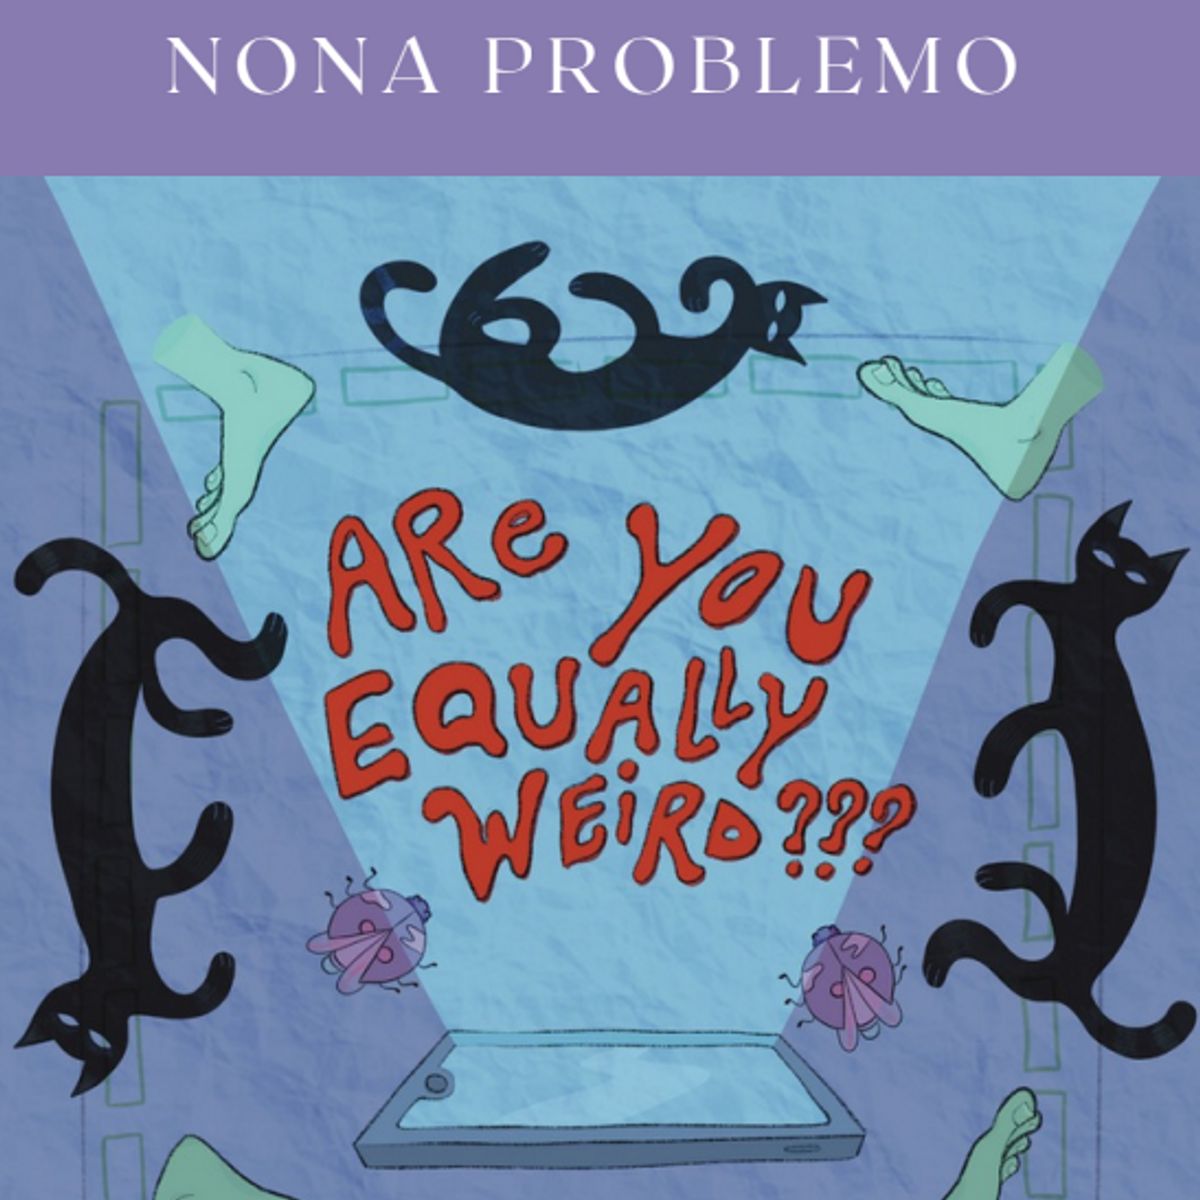 Nona Problemo - Are You Equally Weird???